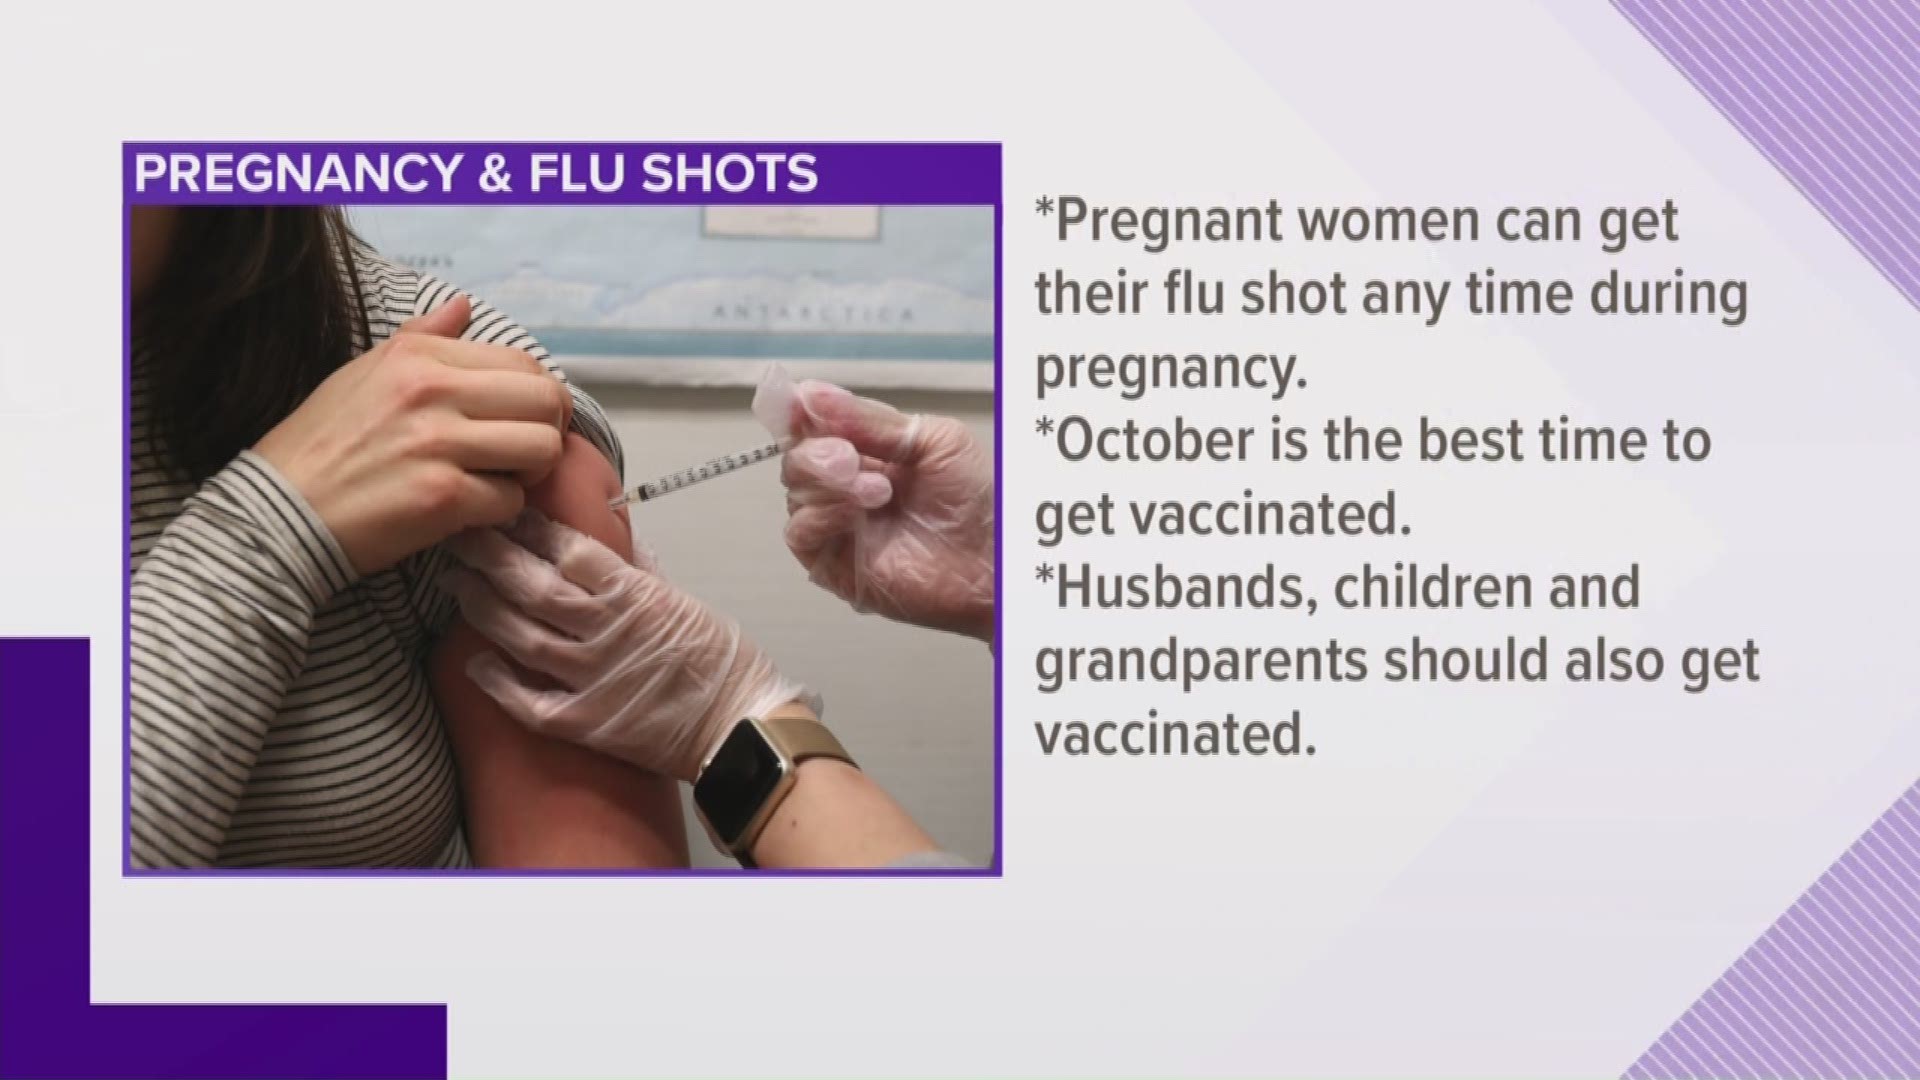 Pregnancy and flu shots